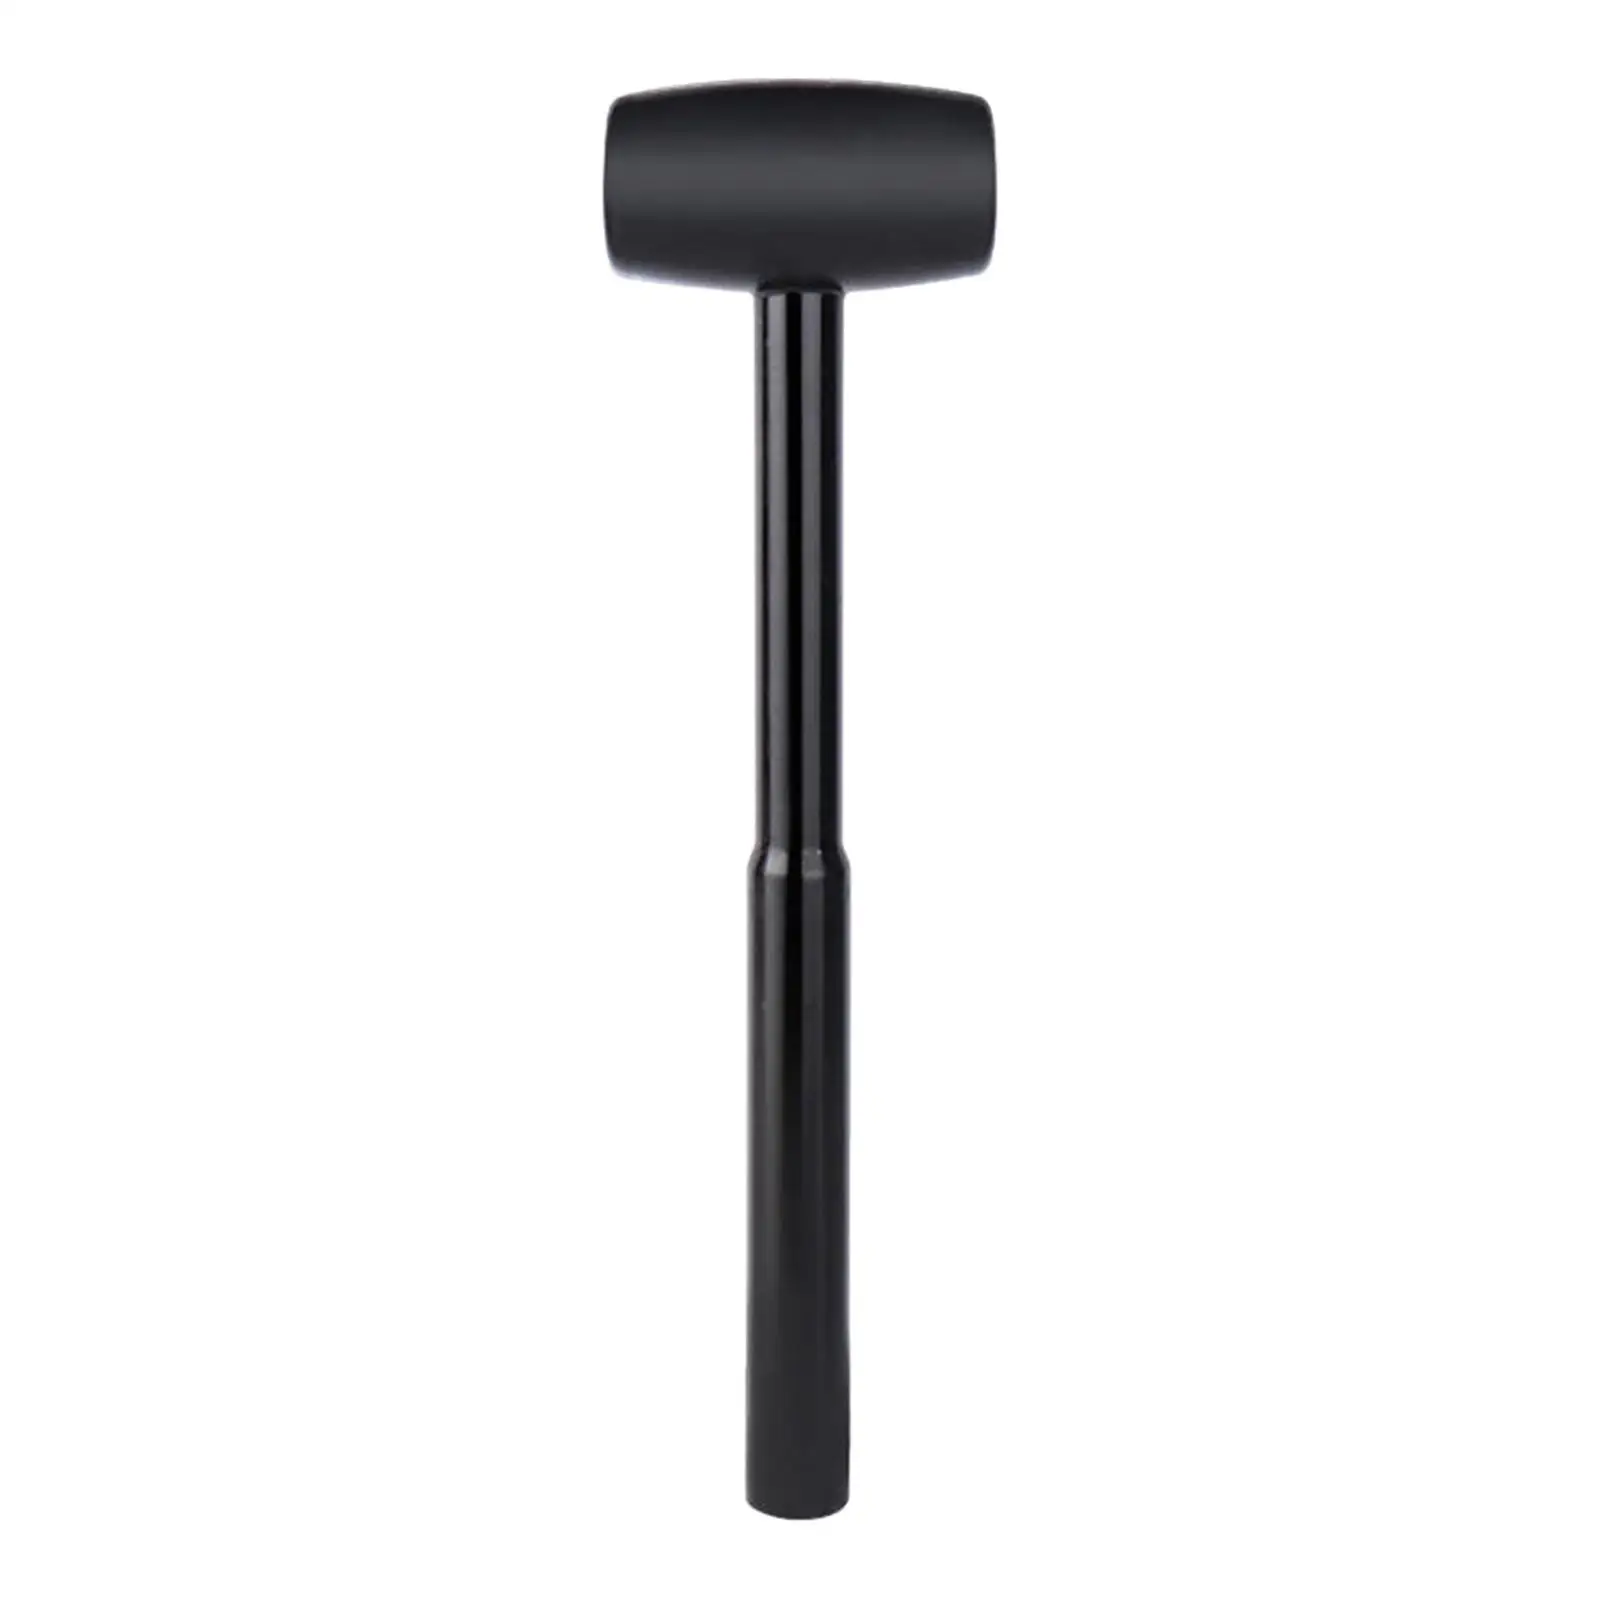 Tile Hammer Mini Comfort Grip Fitment Gadget Type: Rubber Non Slip Repair Tools Round Head for Auto Repair Door Floor Tile